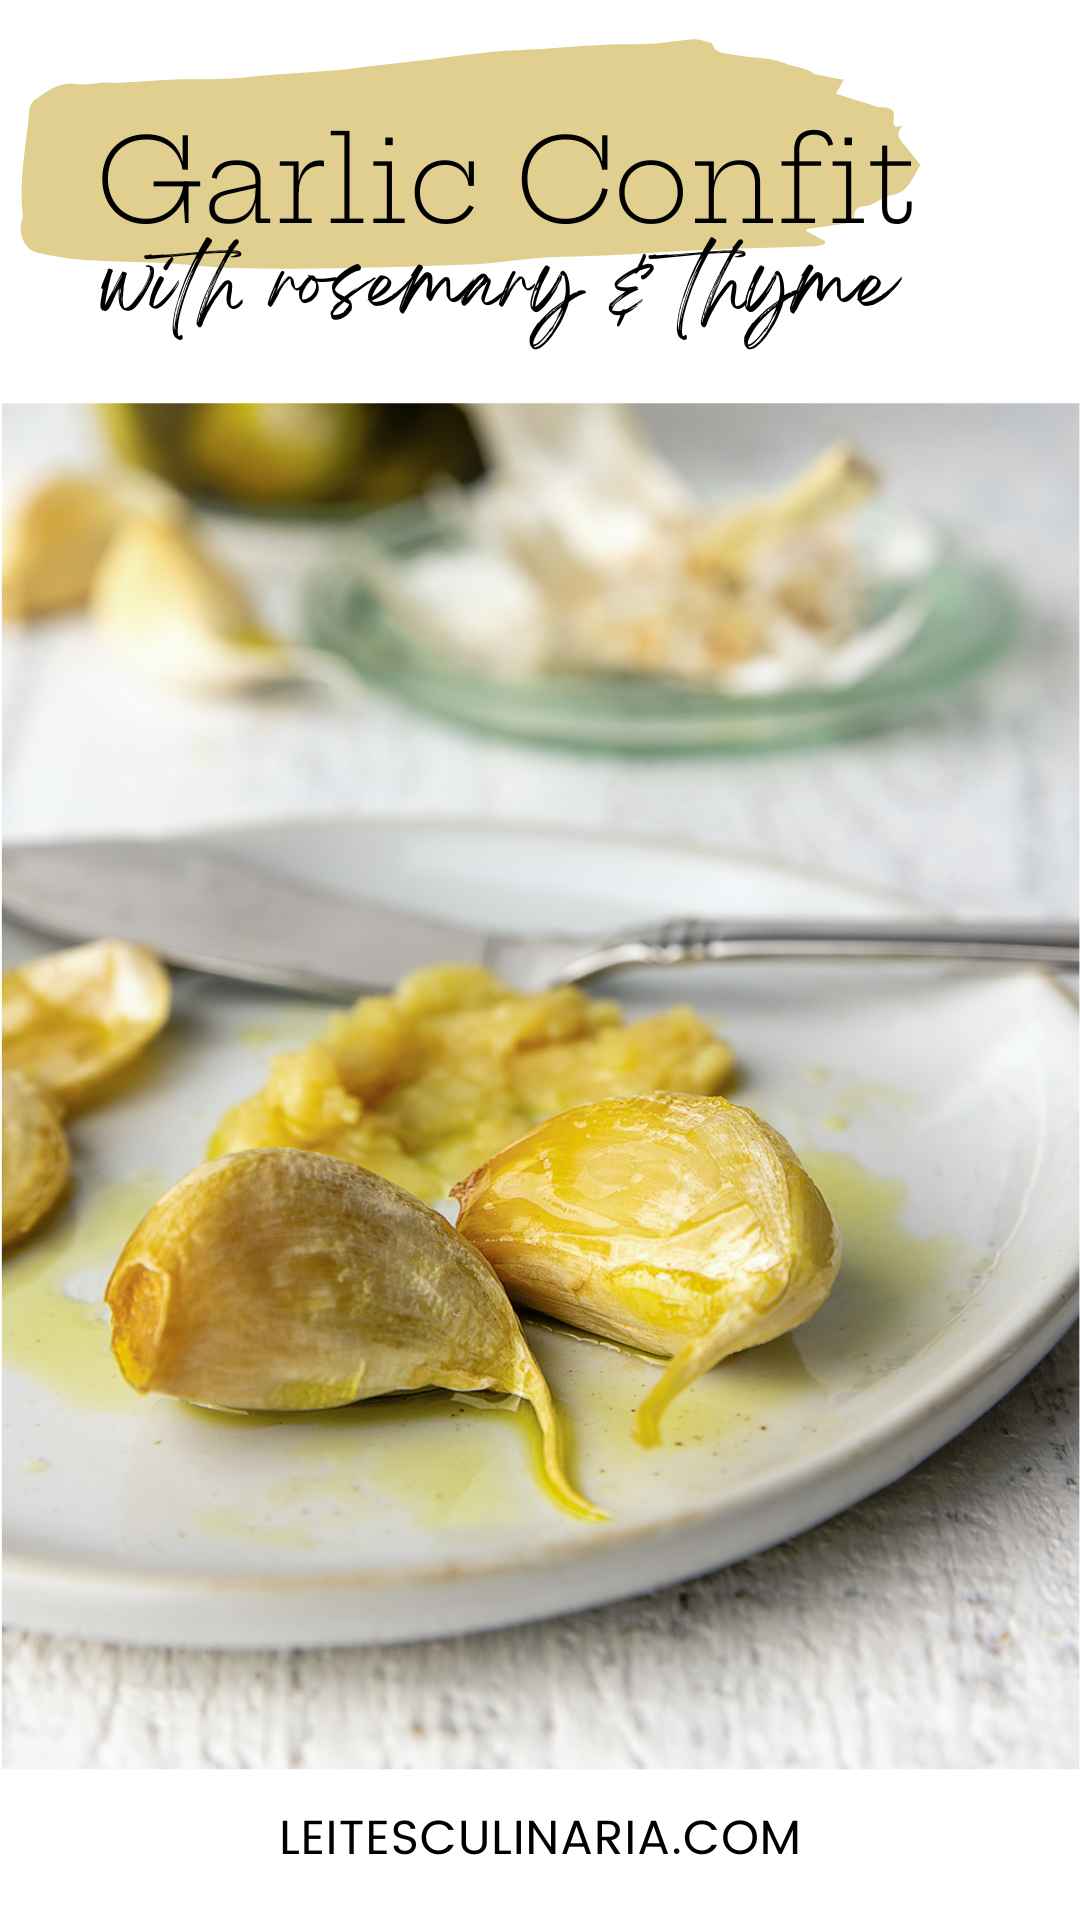 Garlic confit cloves on a plate.